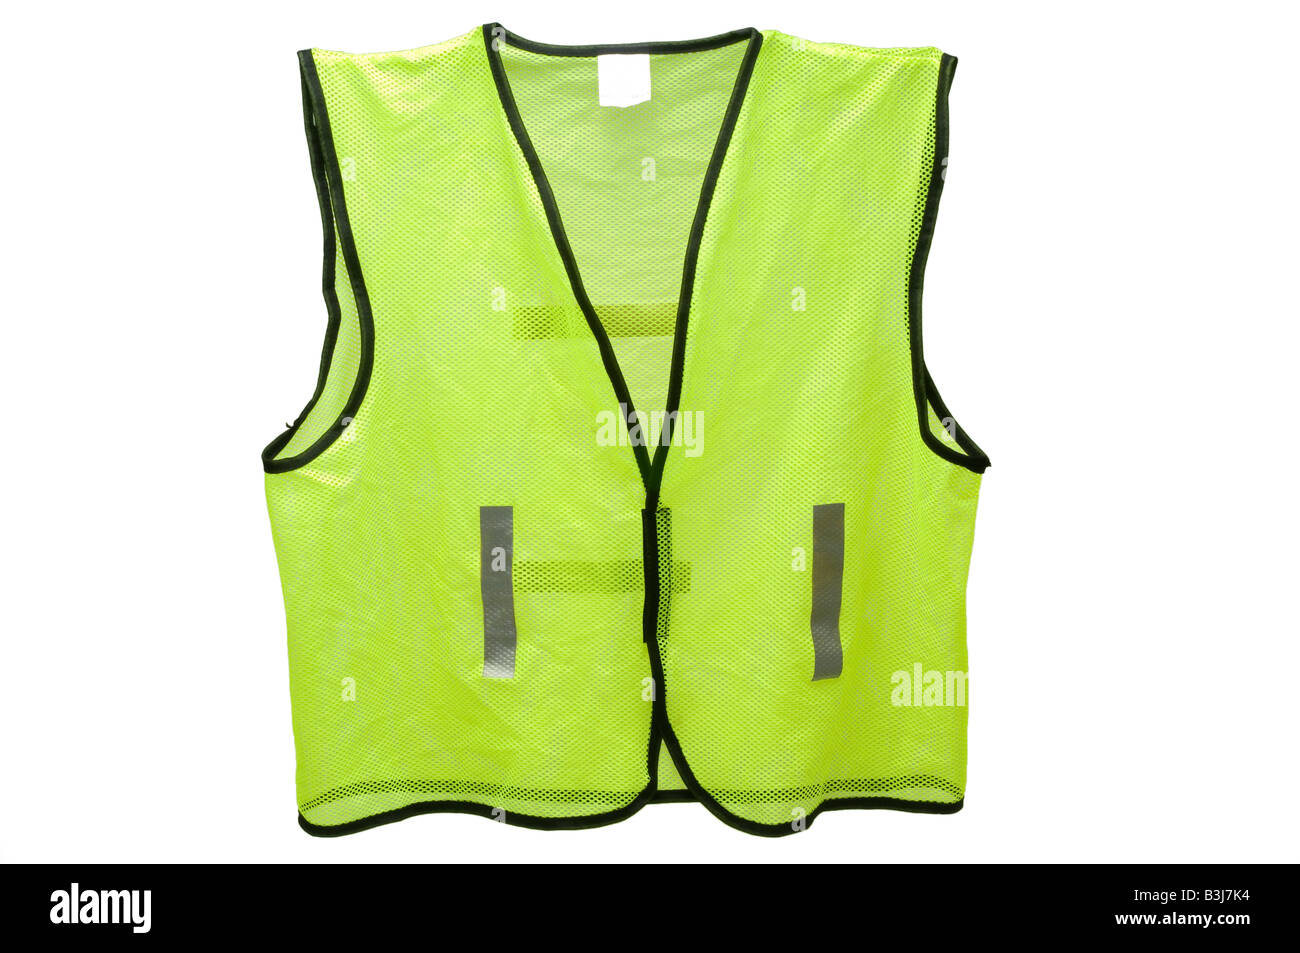 Yellow reflective safety vest Stock Photo - Alamy